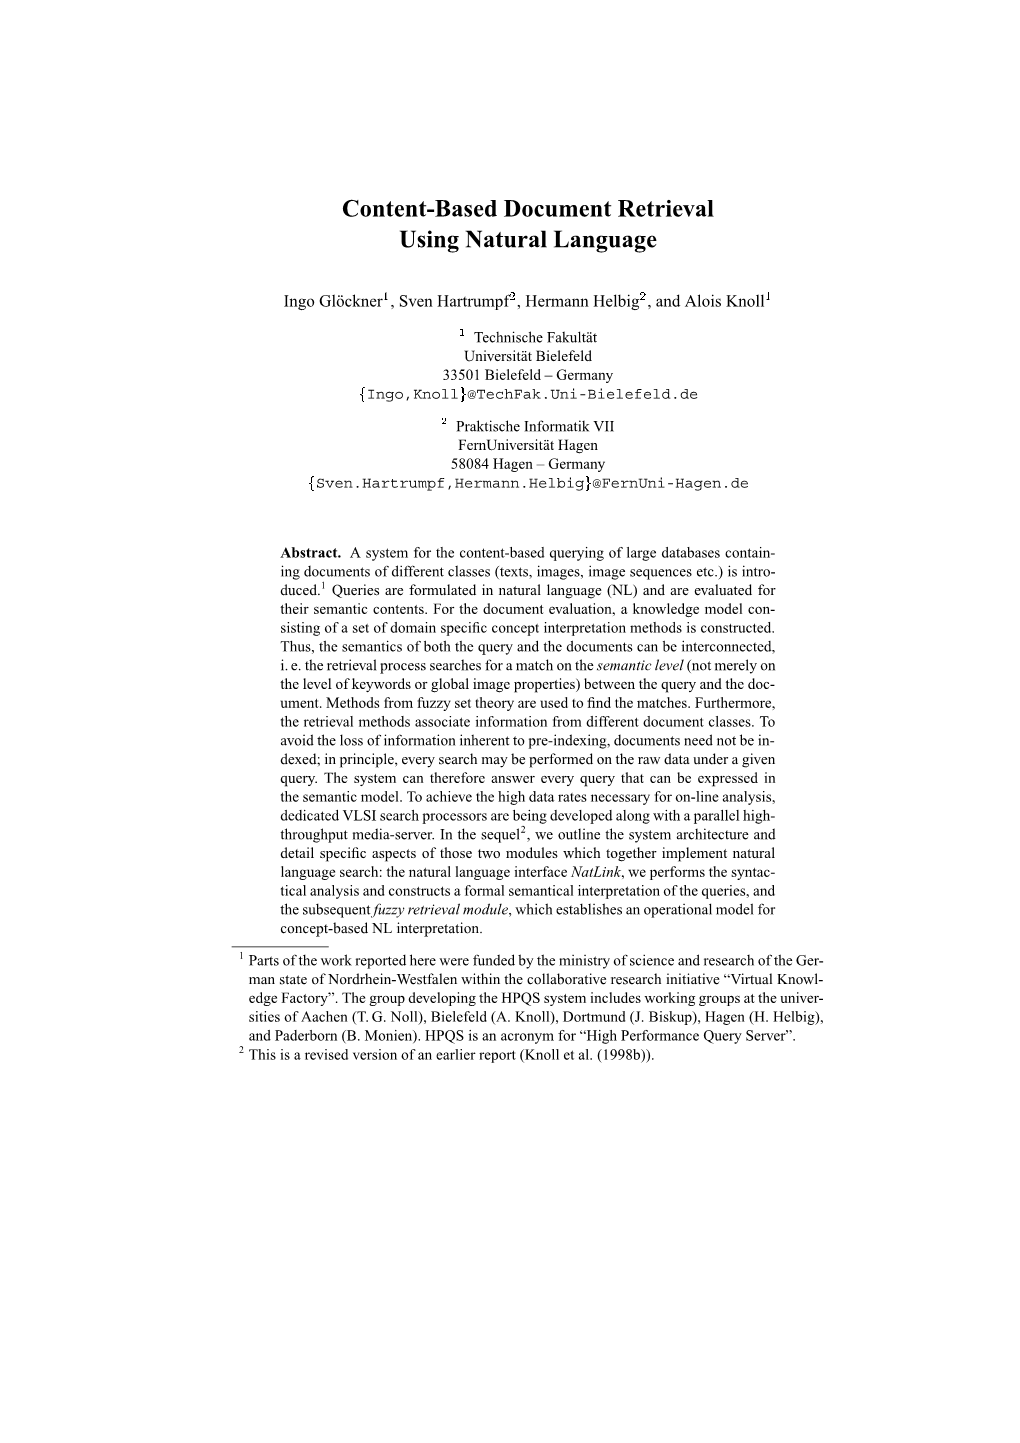 Content-Based Document Retrieval Using Natural Language